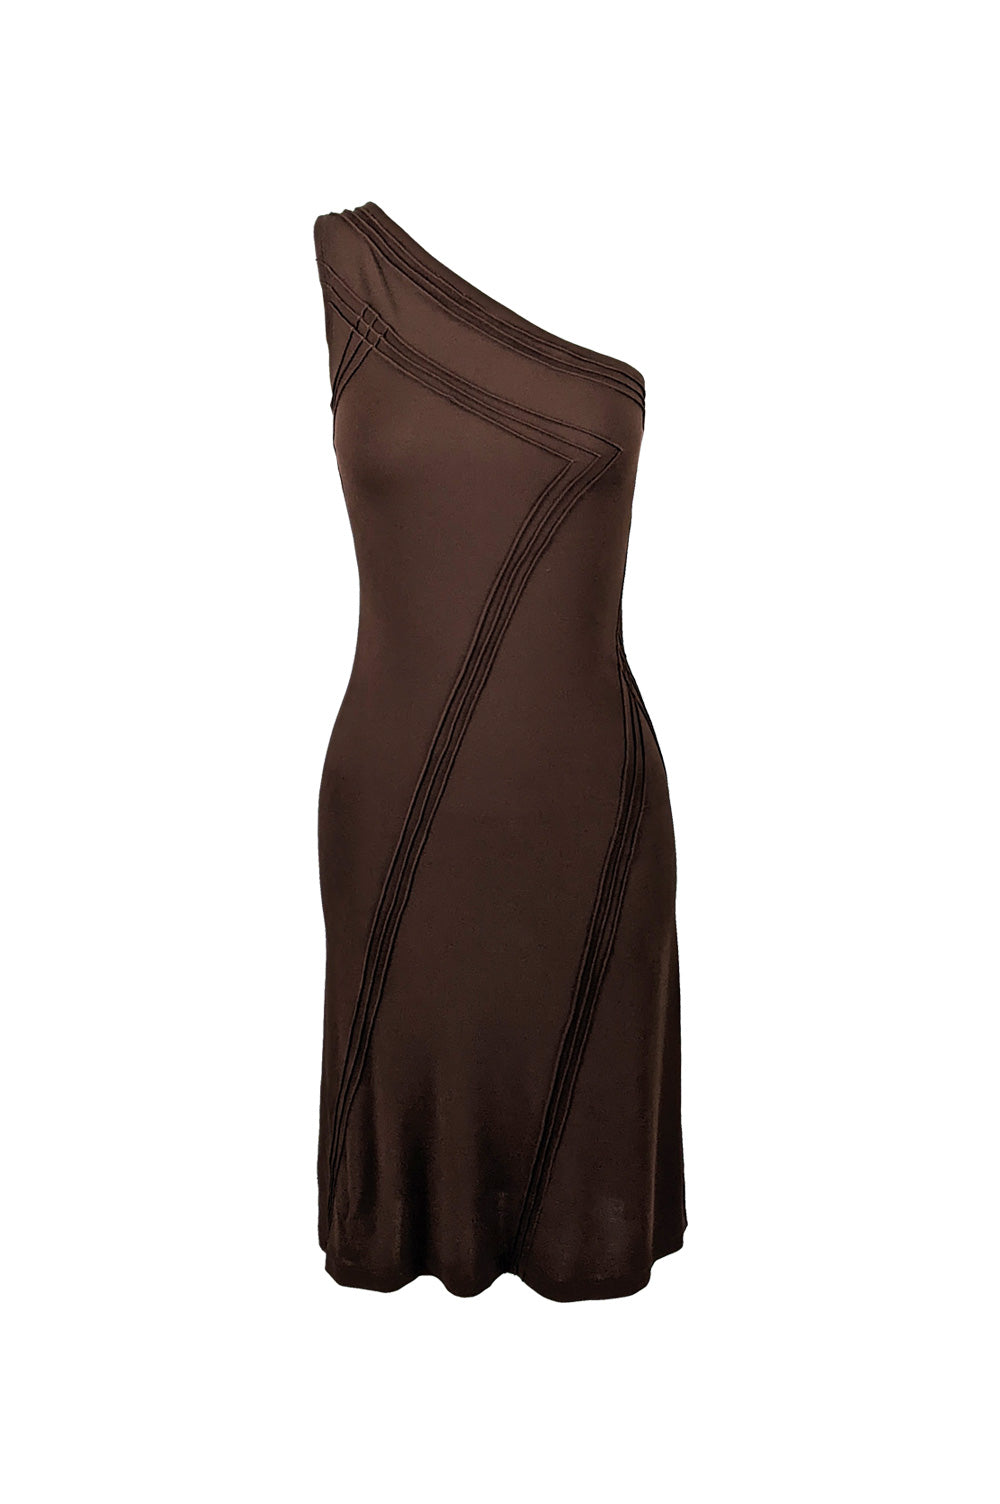 Donna Karan Vintage Brown Bodycon One Shoulder Dress, 1990s